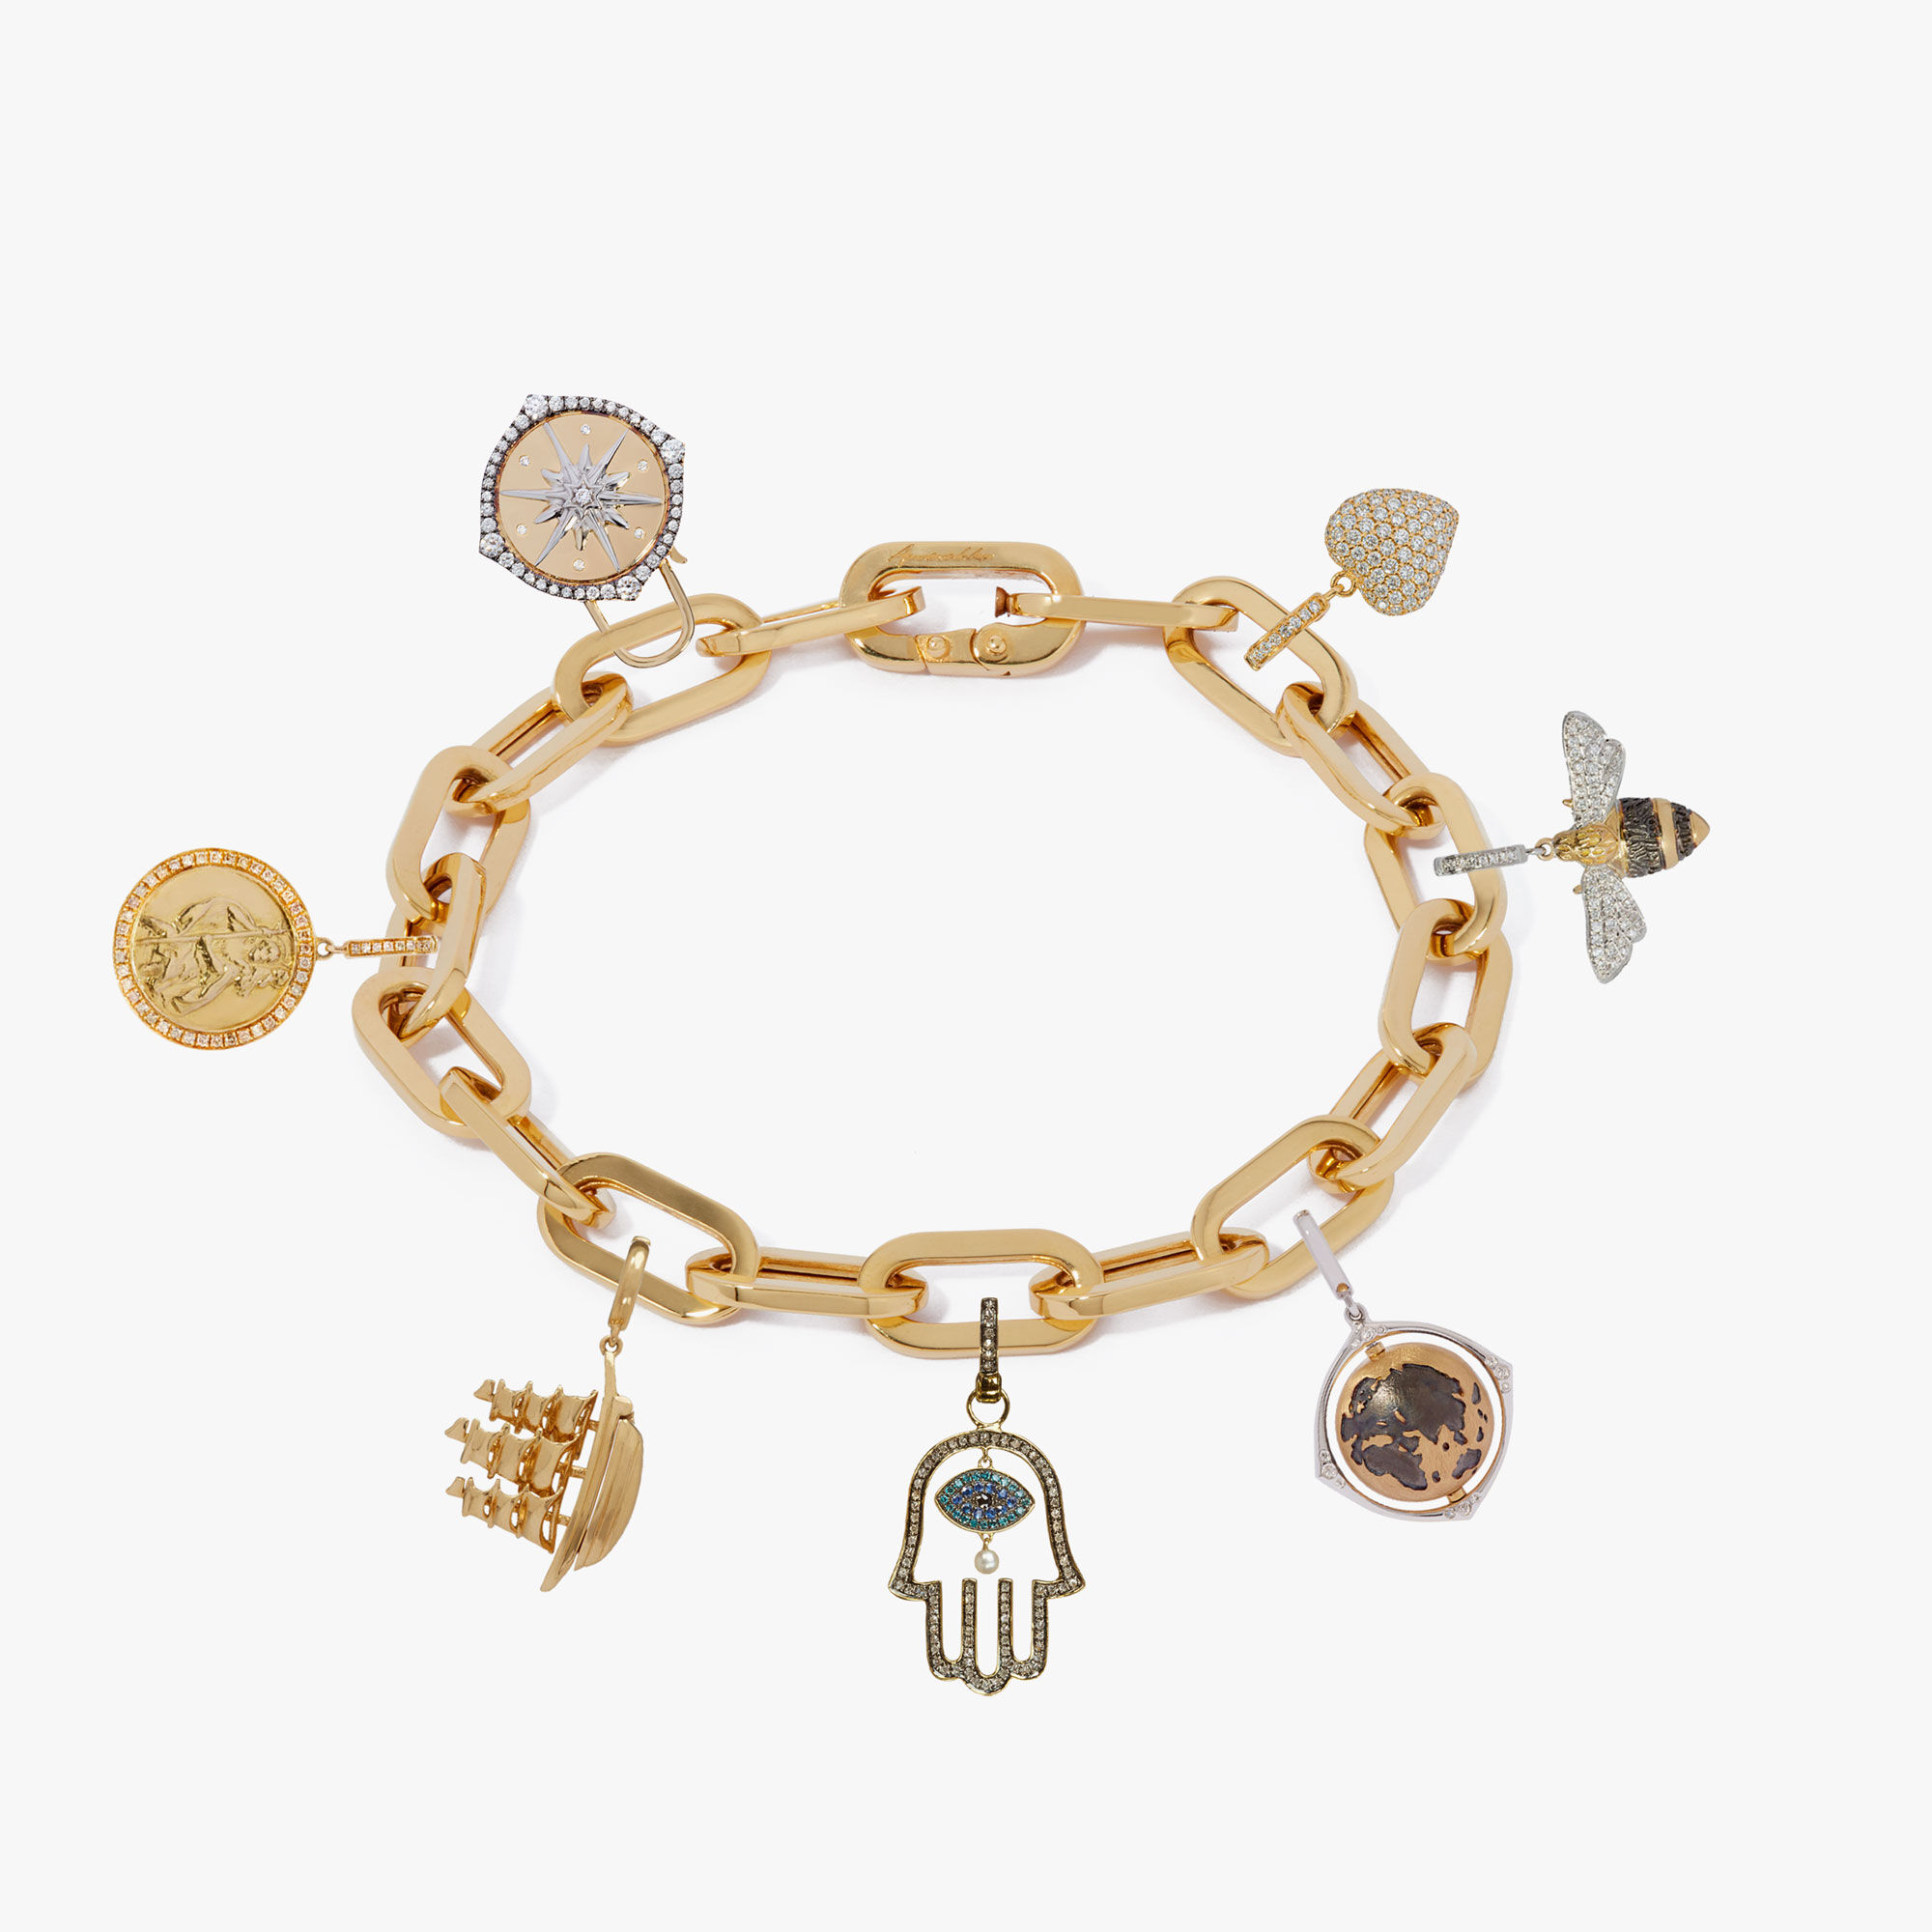 Update more than 81 18ct gold charm bracelet latest - ceg.edu.vn